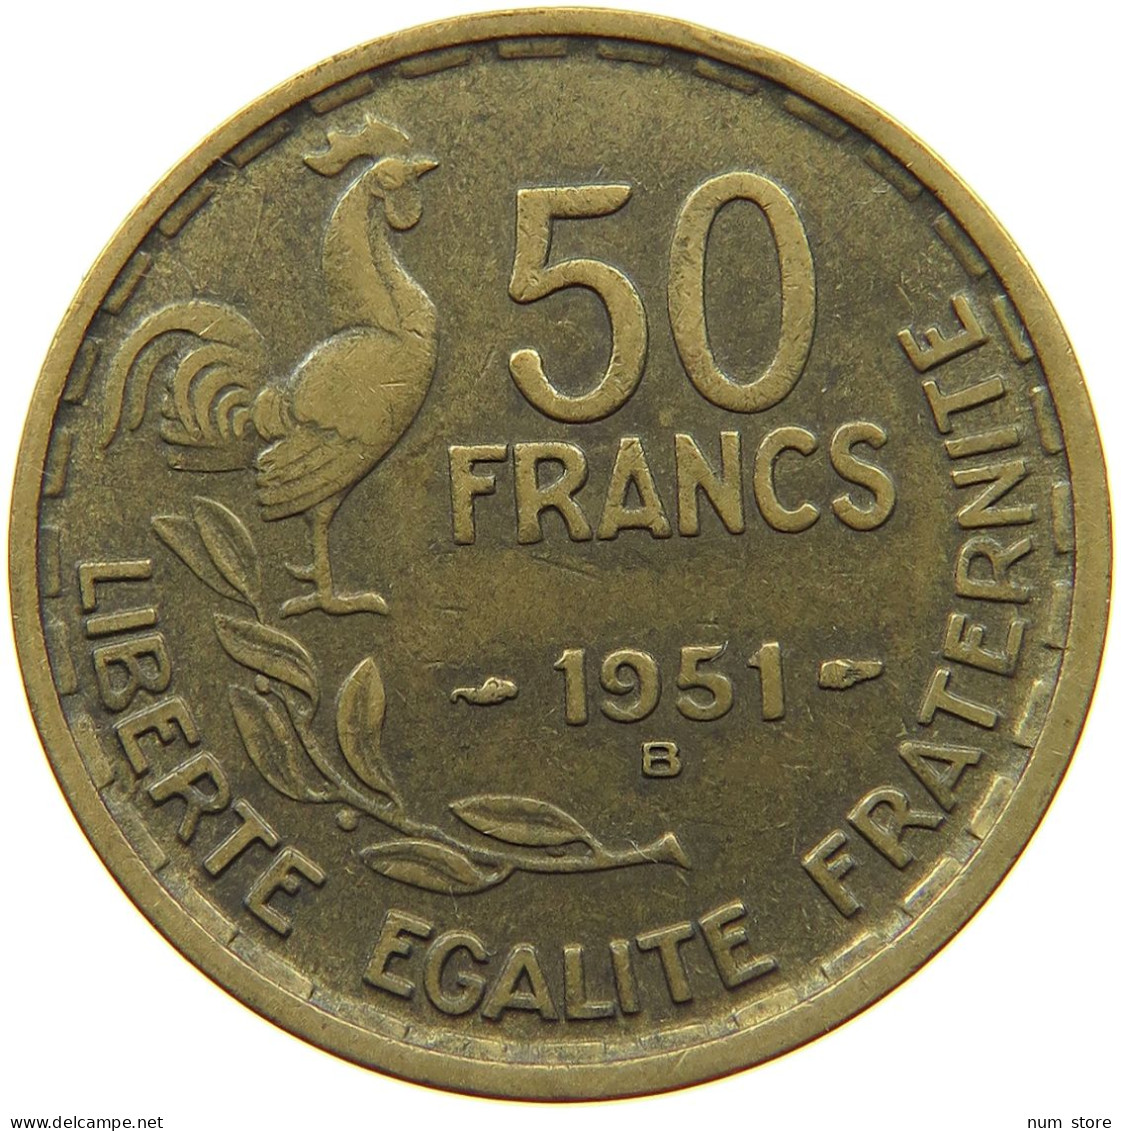 FRANCE 50 FRANCS 1951 B #s066 0233 - 50 Francs